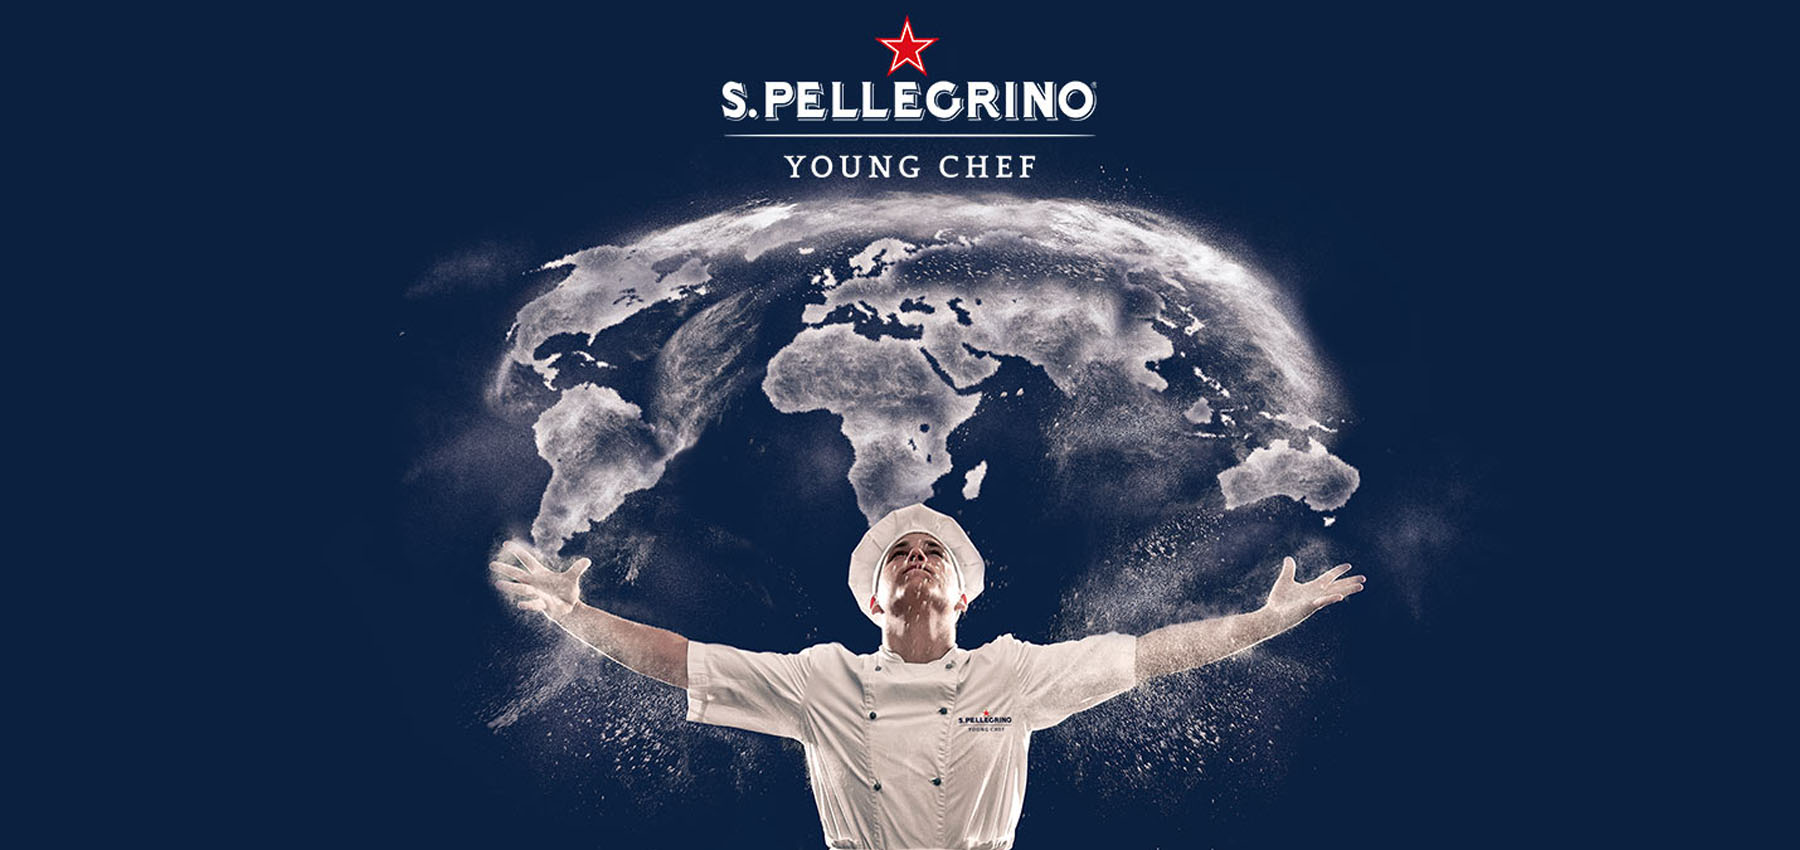 S.Pellegrino - Young Chef